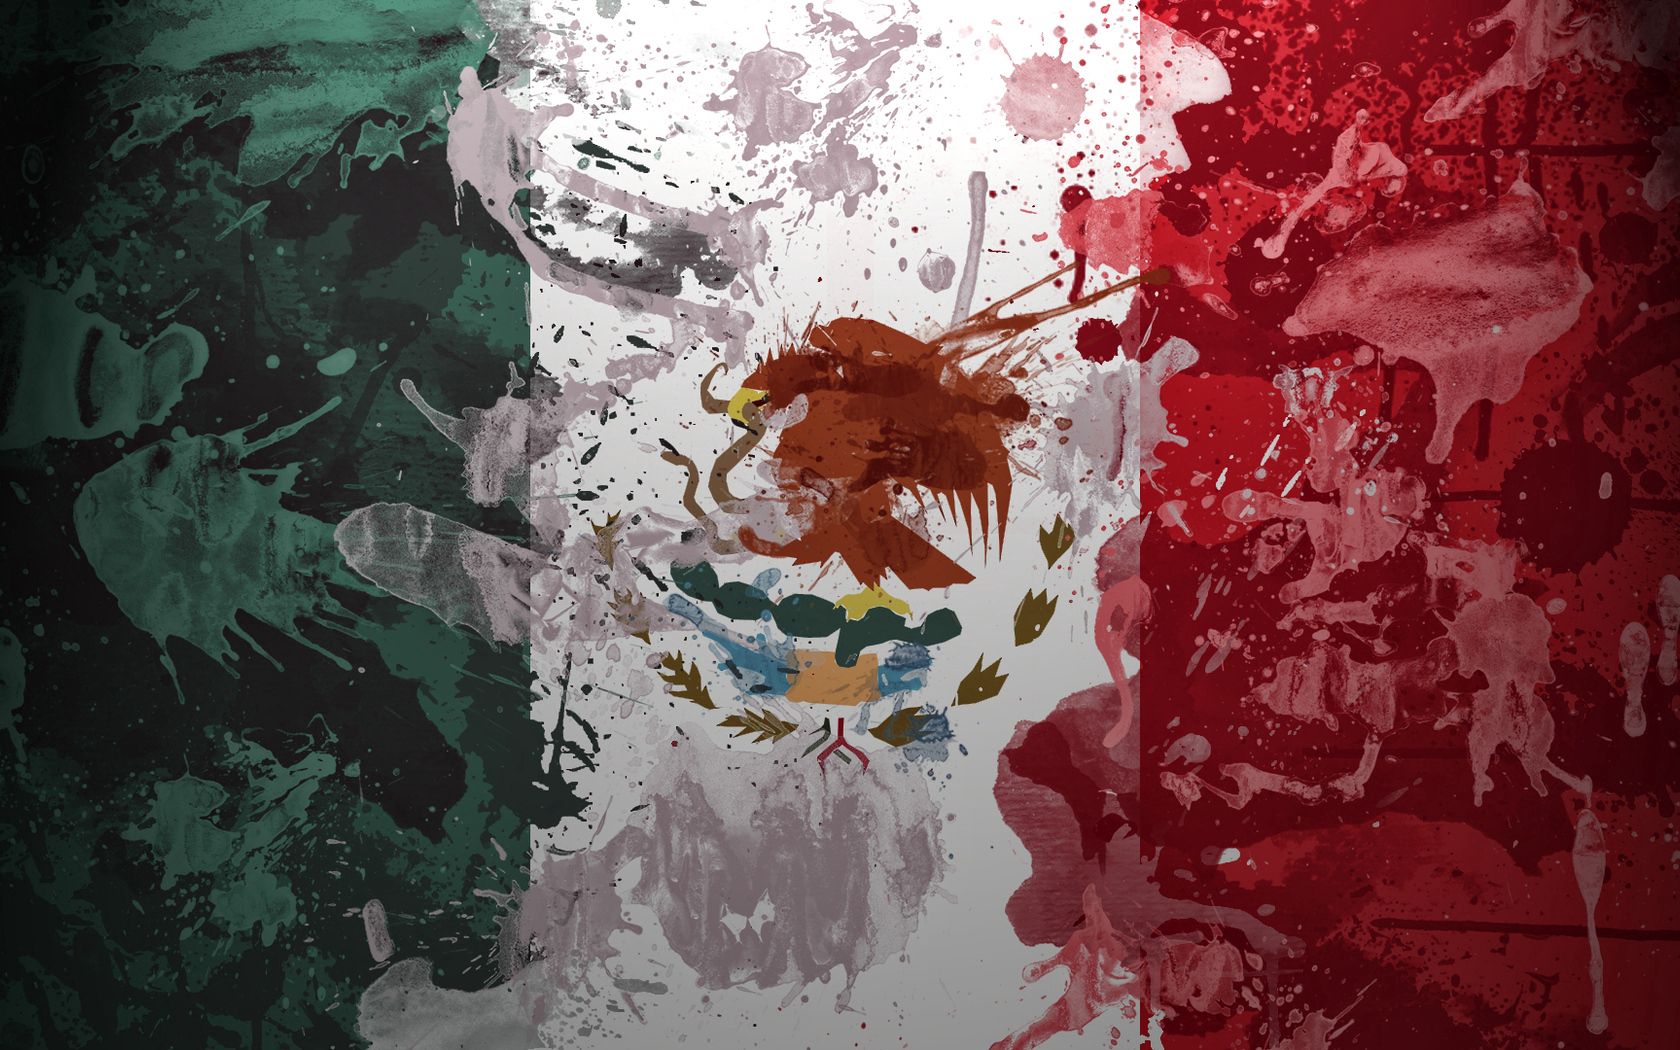 Скачать обои бесплатно Флаг, Краски, Мексика, Текстура, Фон, Текстуры картинка на рабочий стол ПК